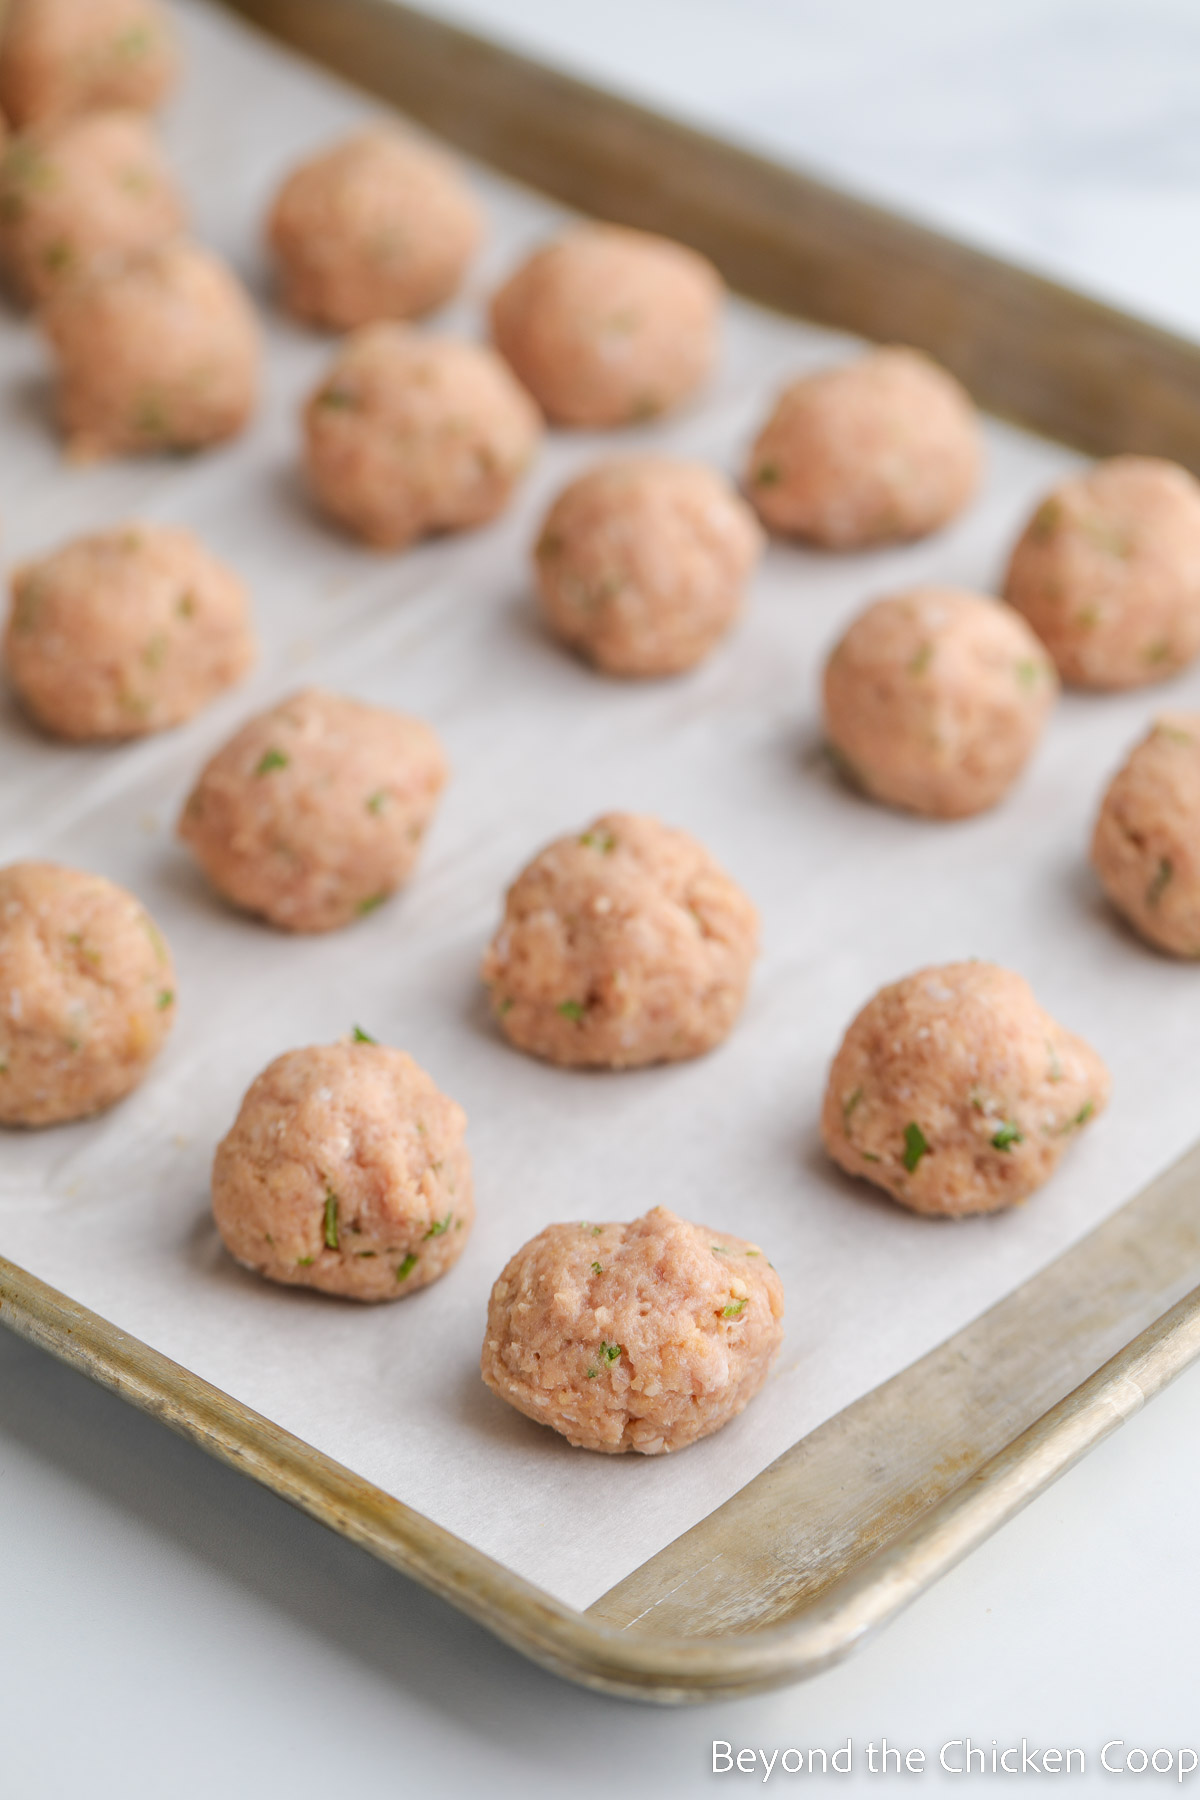 Unbaked meatballs on a baking sheet. 